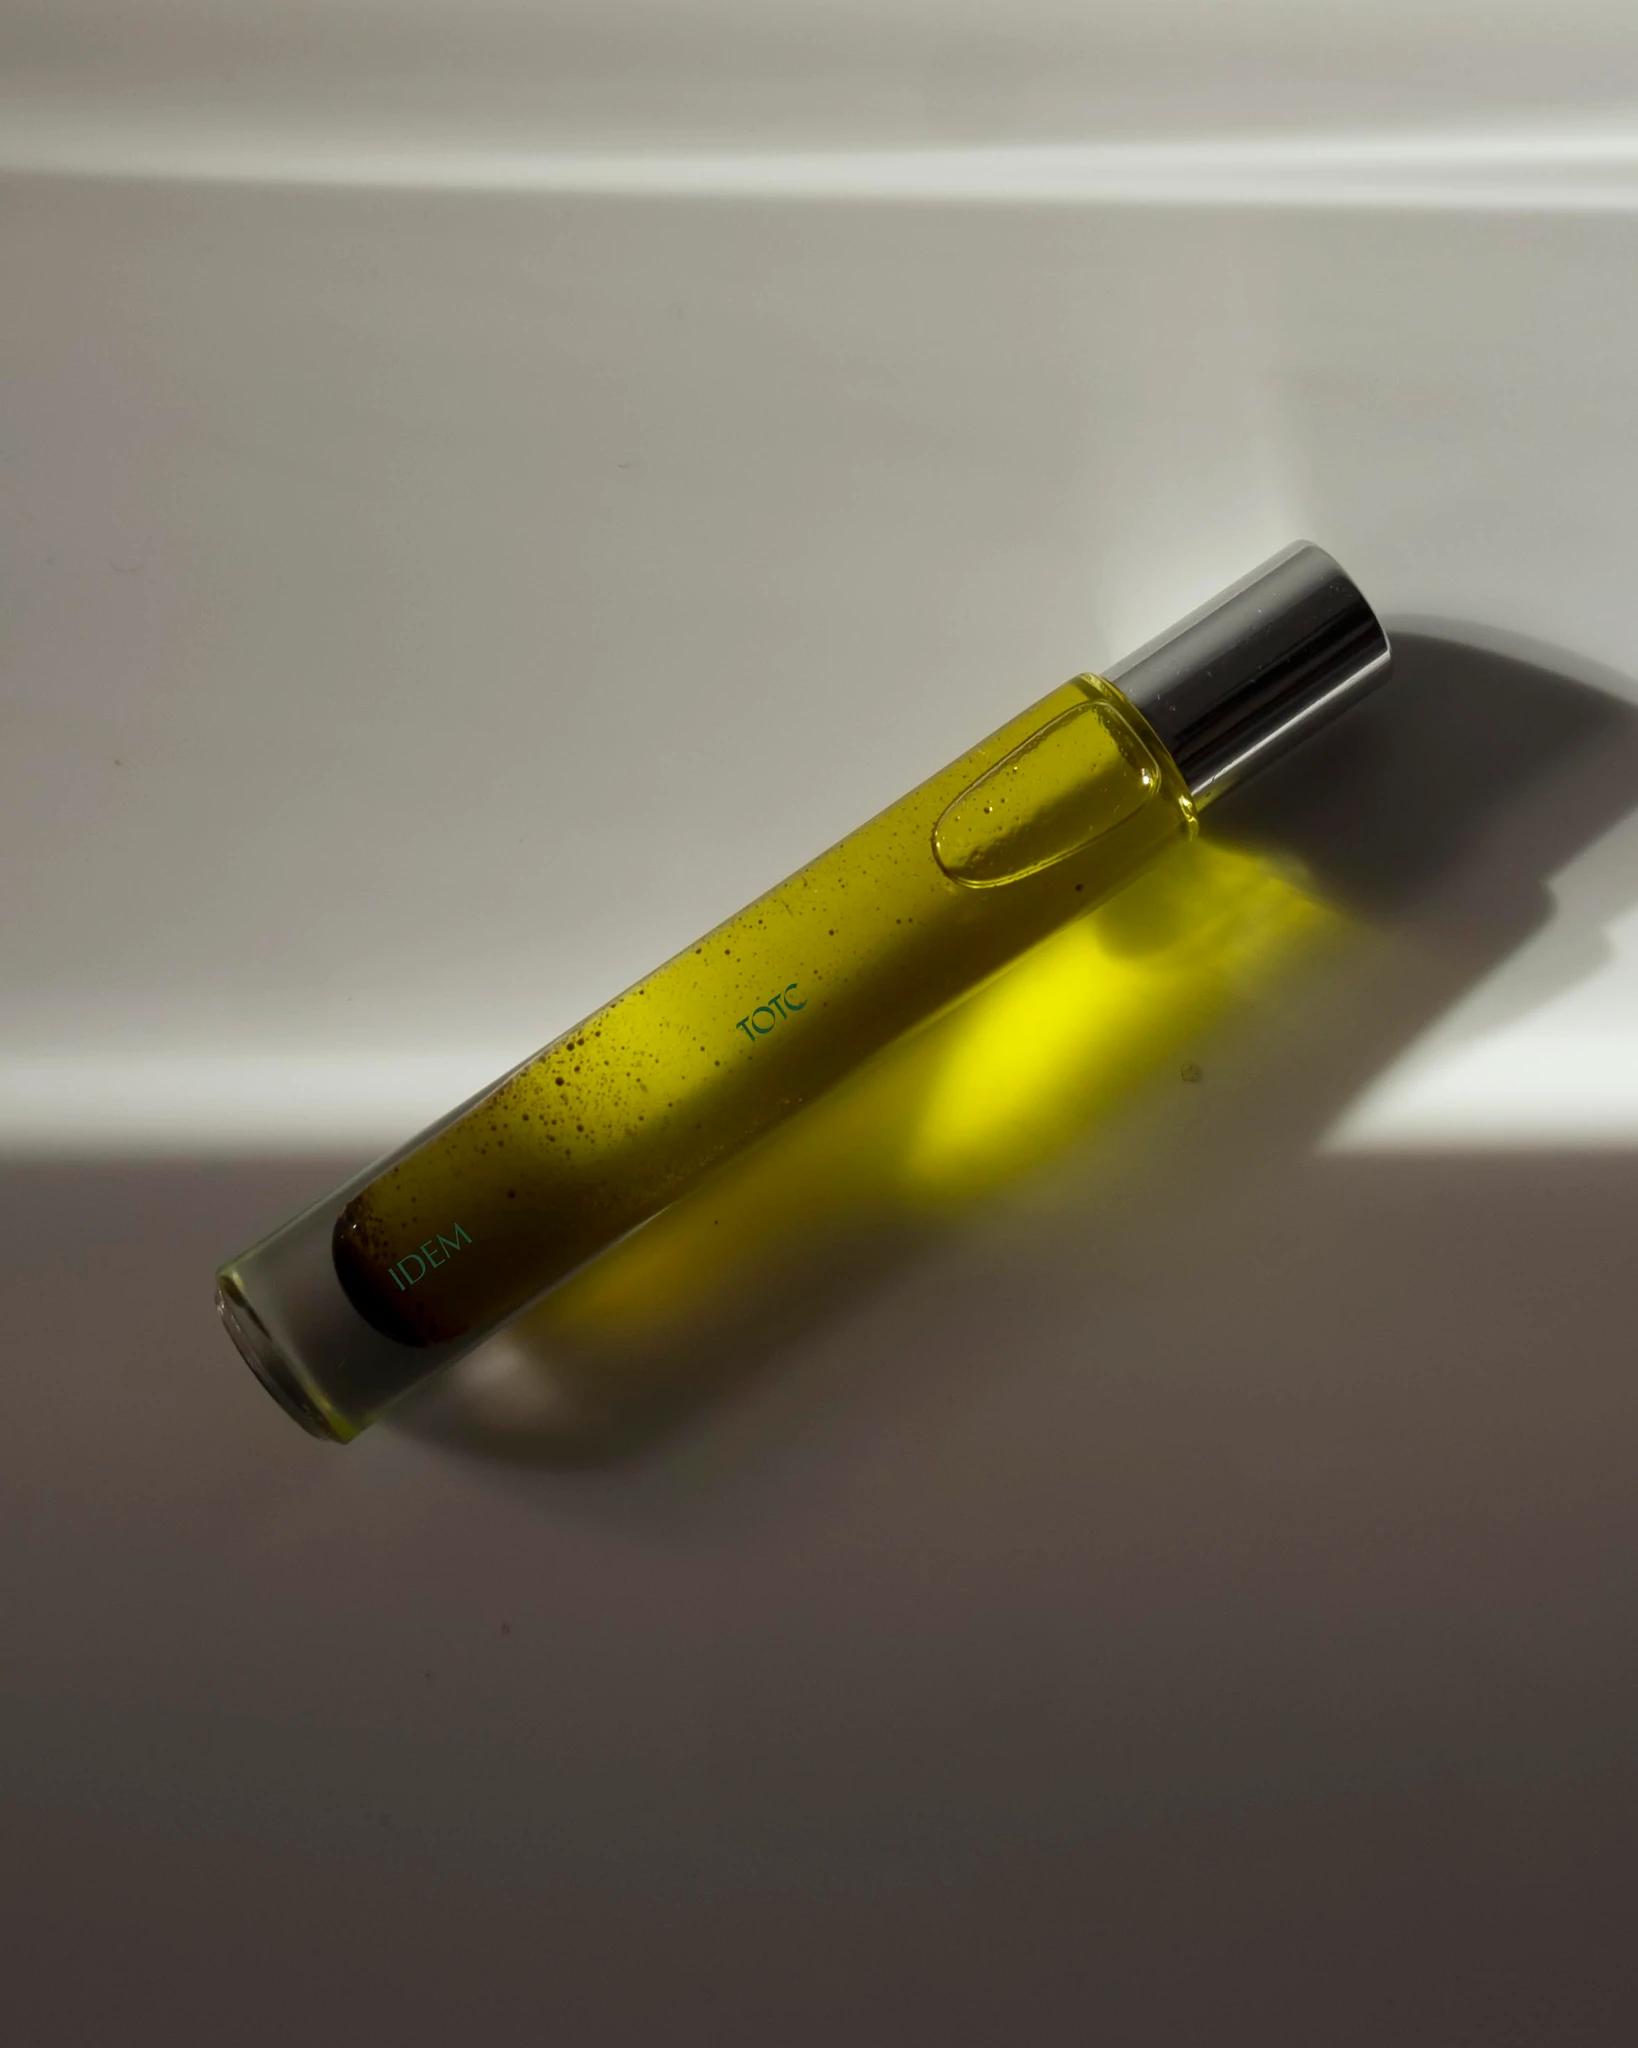 Product Image for Idem Pocket Perfume Roller